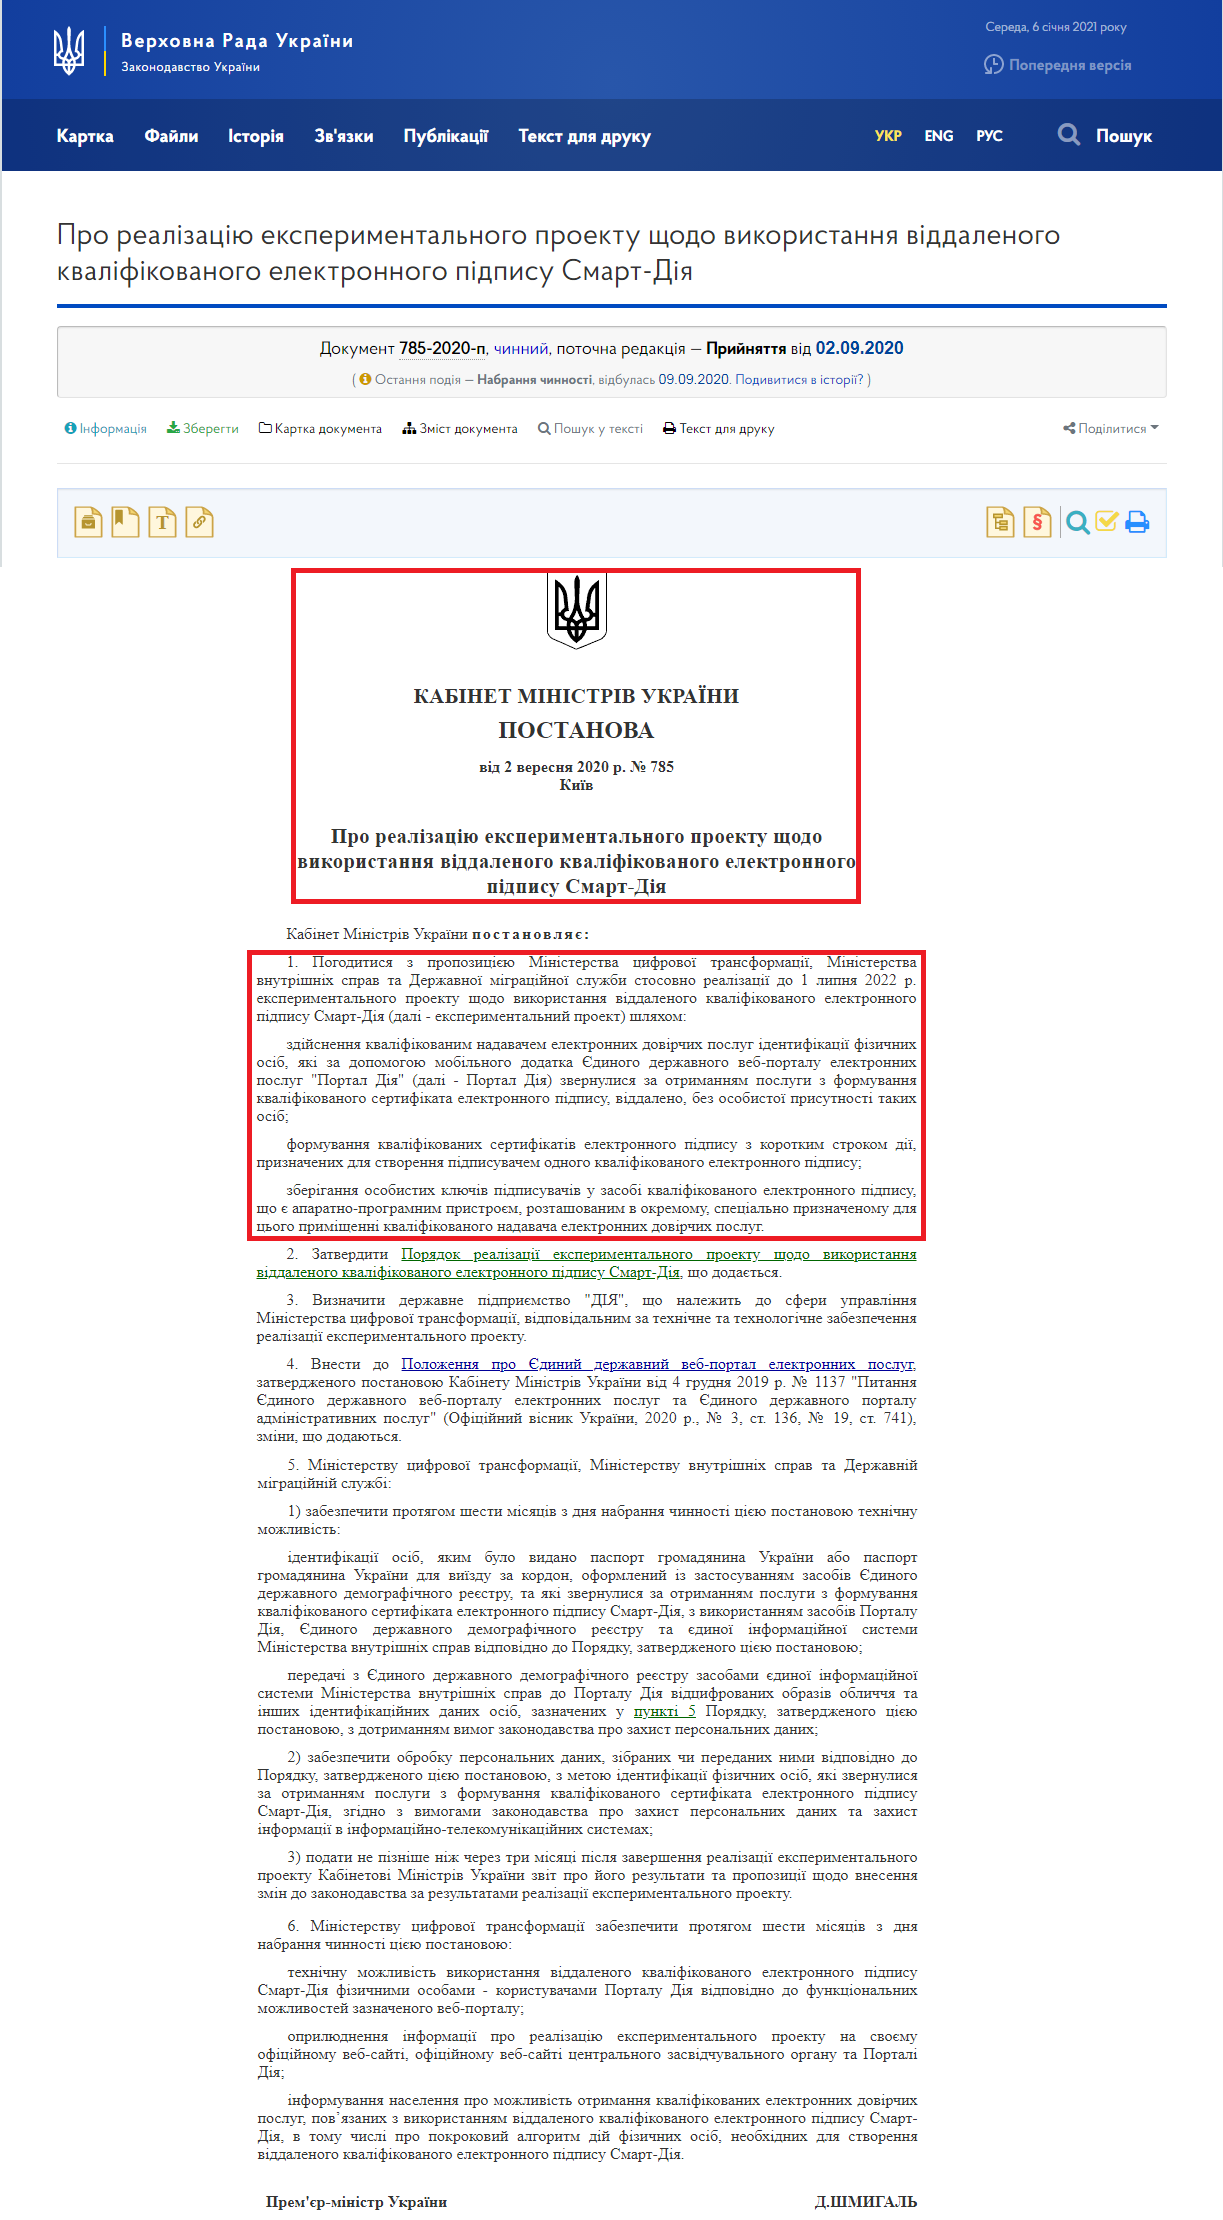 https://zakon.rada.gov.ua/laws/show/785-2020-%D0%BF#Text